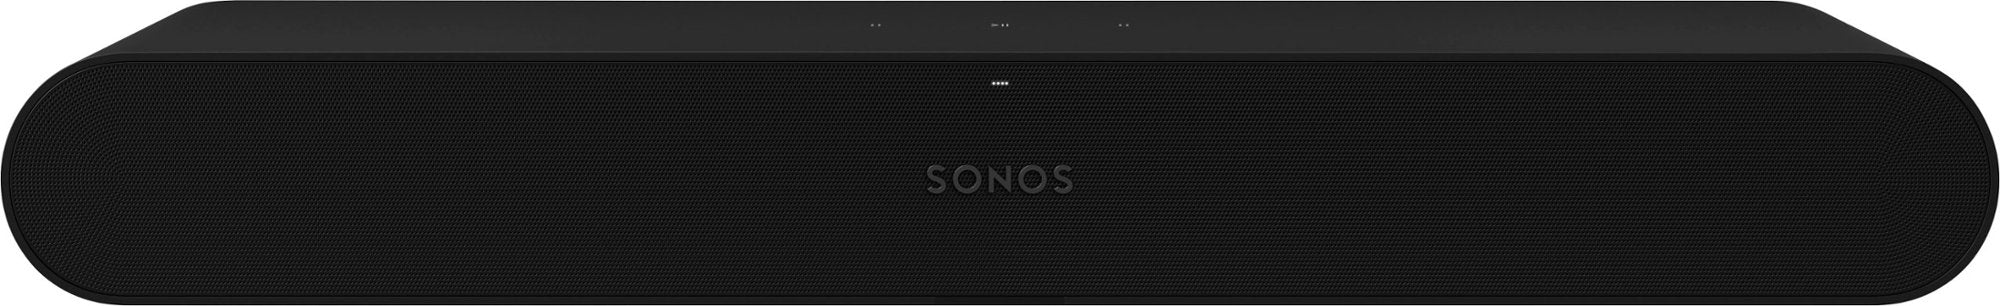 Sonos Ray Soundbar with Wi-Fi